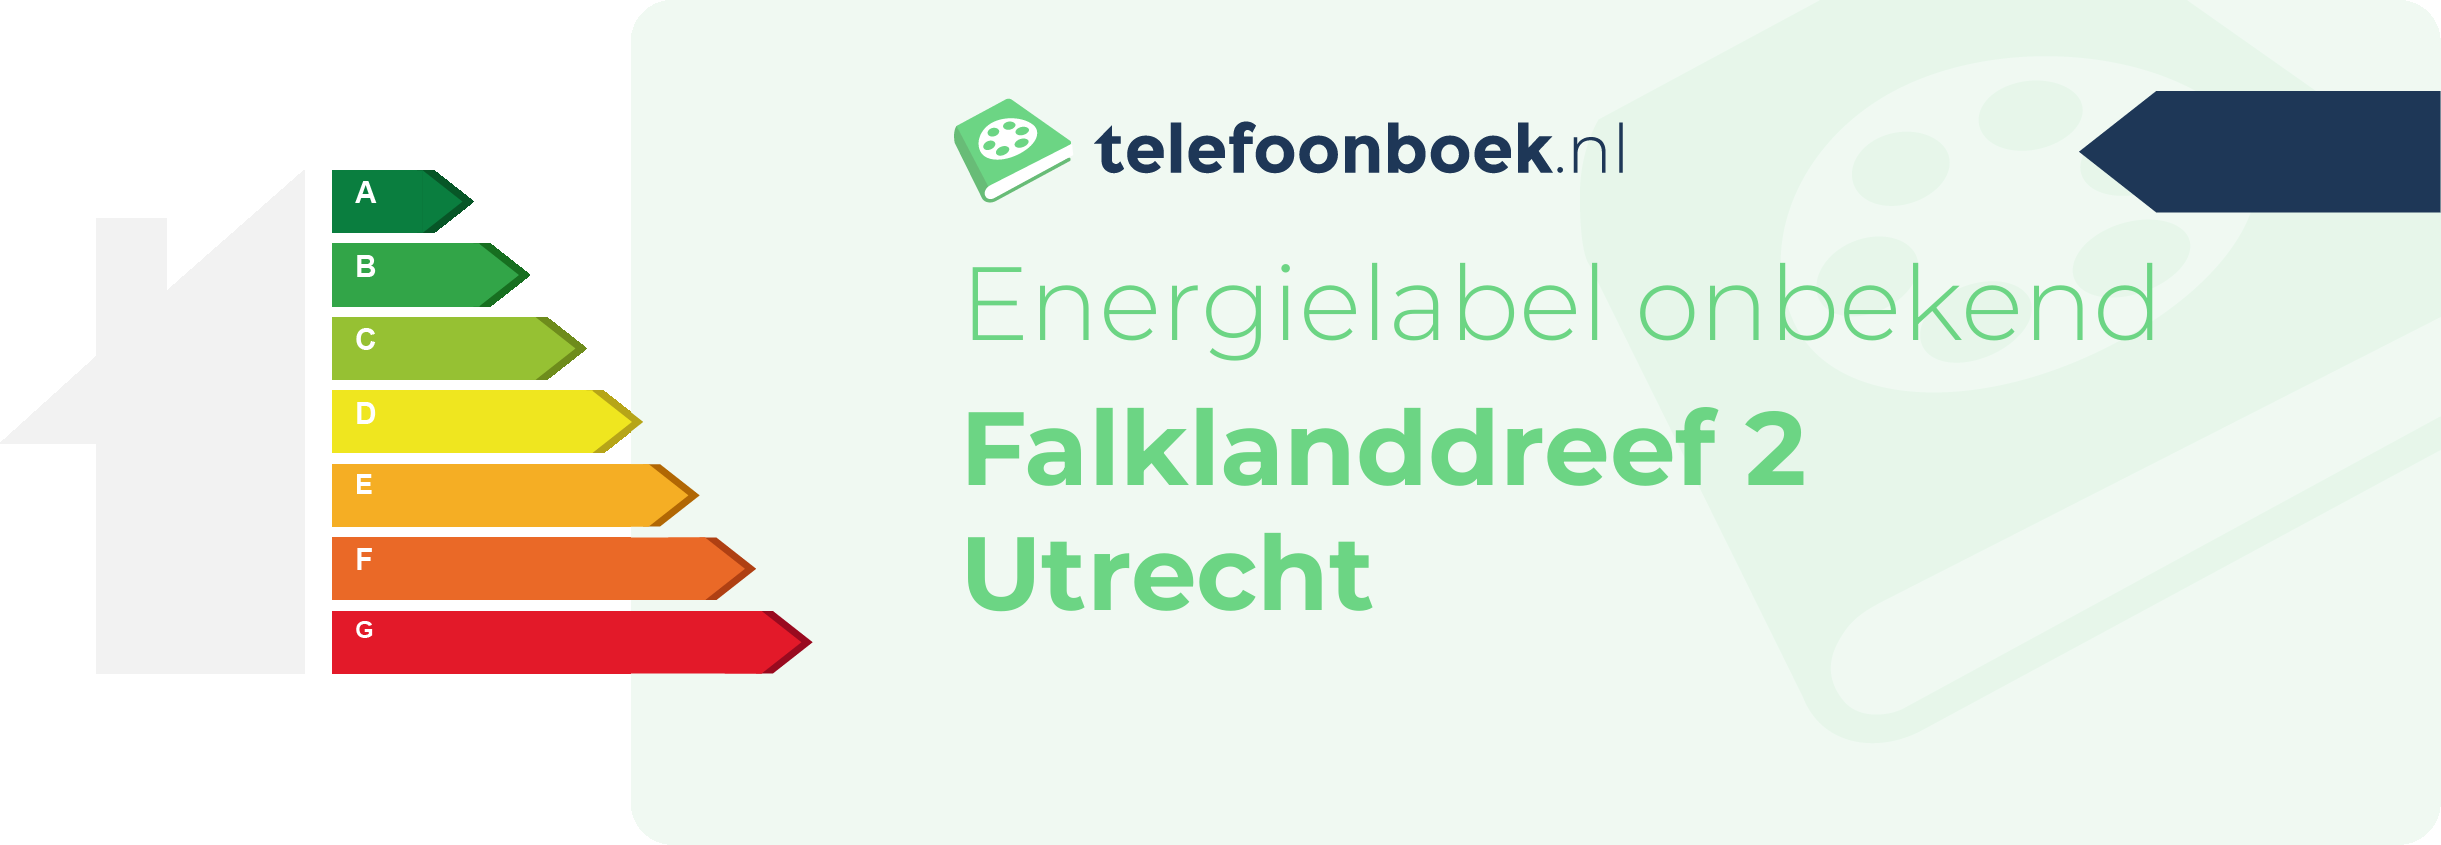 Energielabel Falklanddreef 2 Utrecht